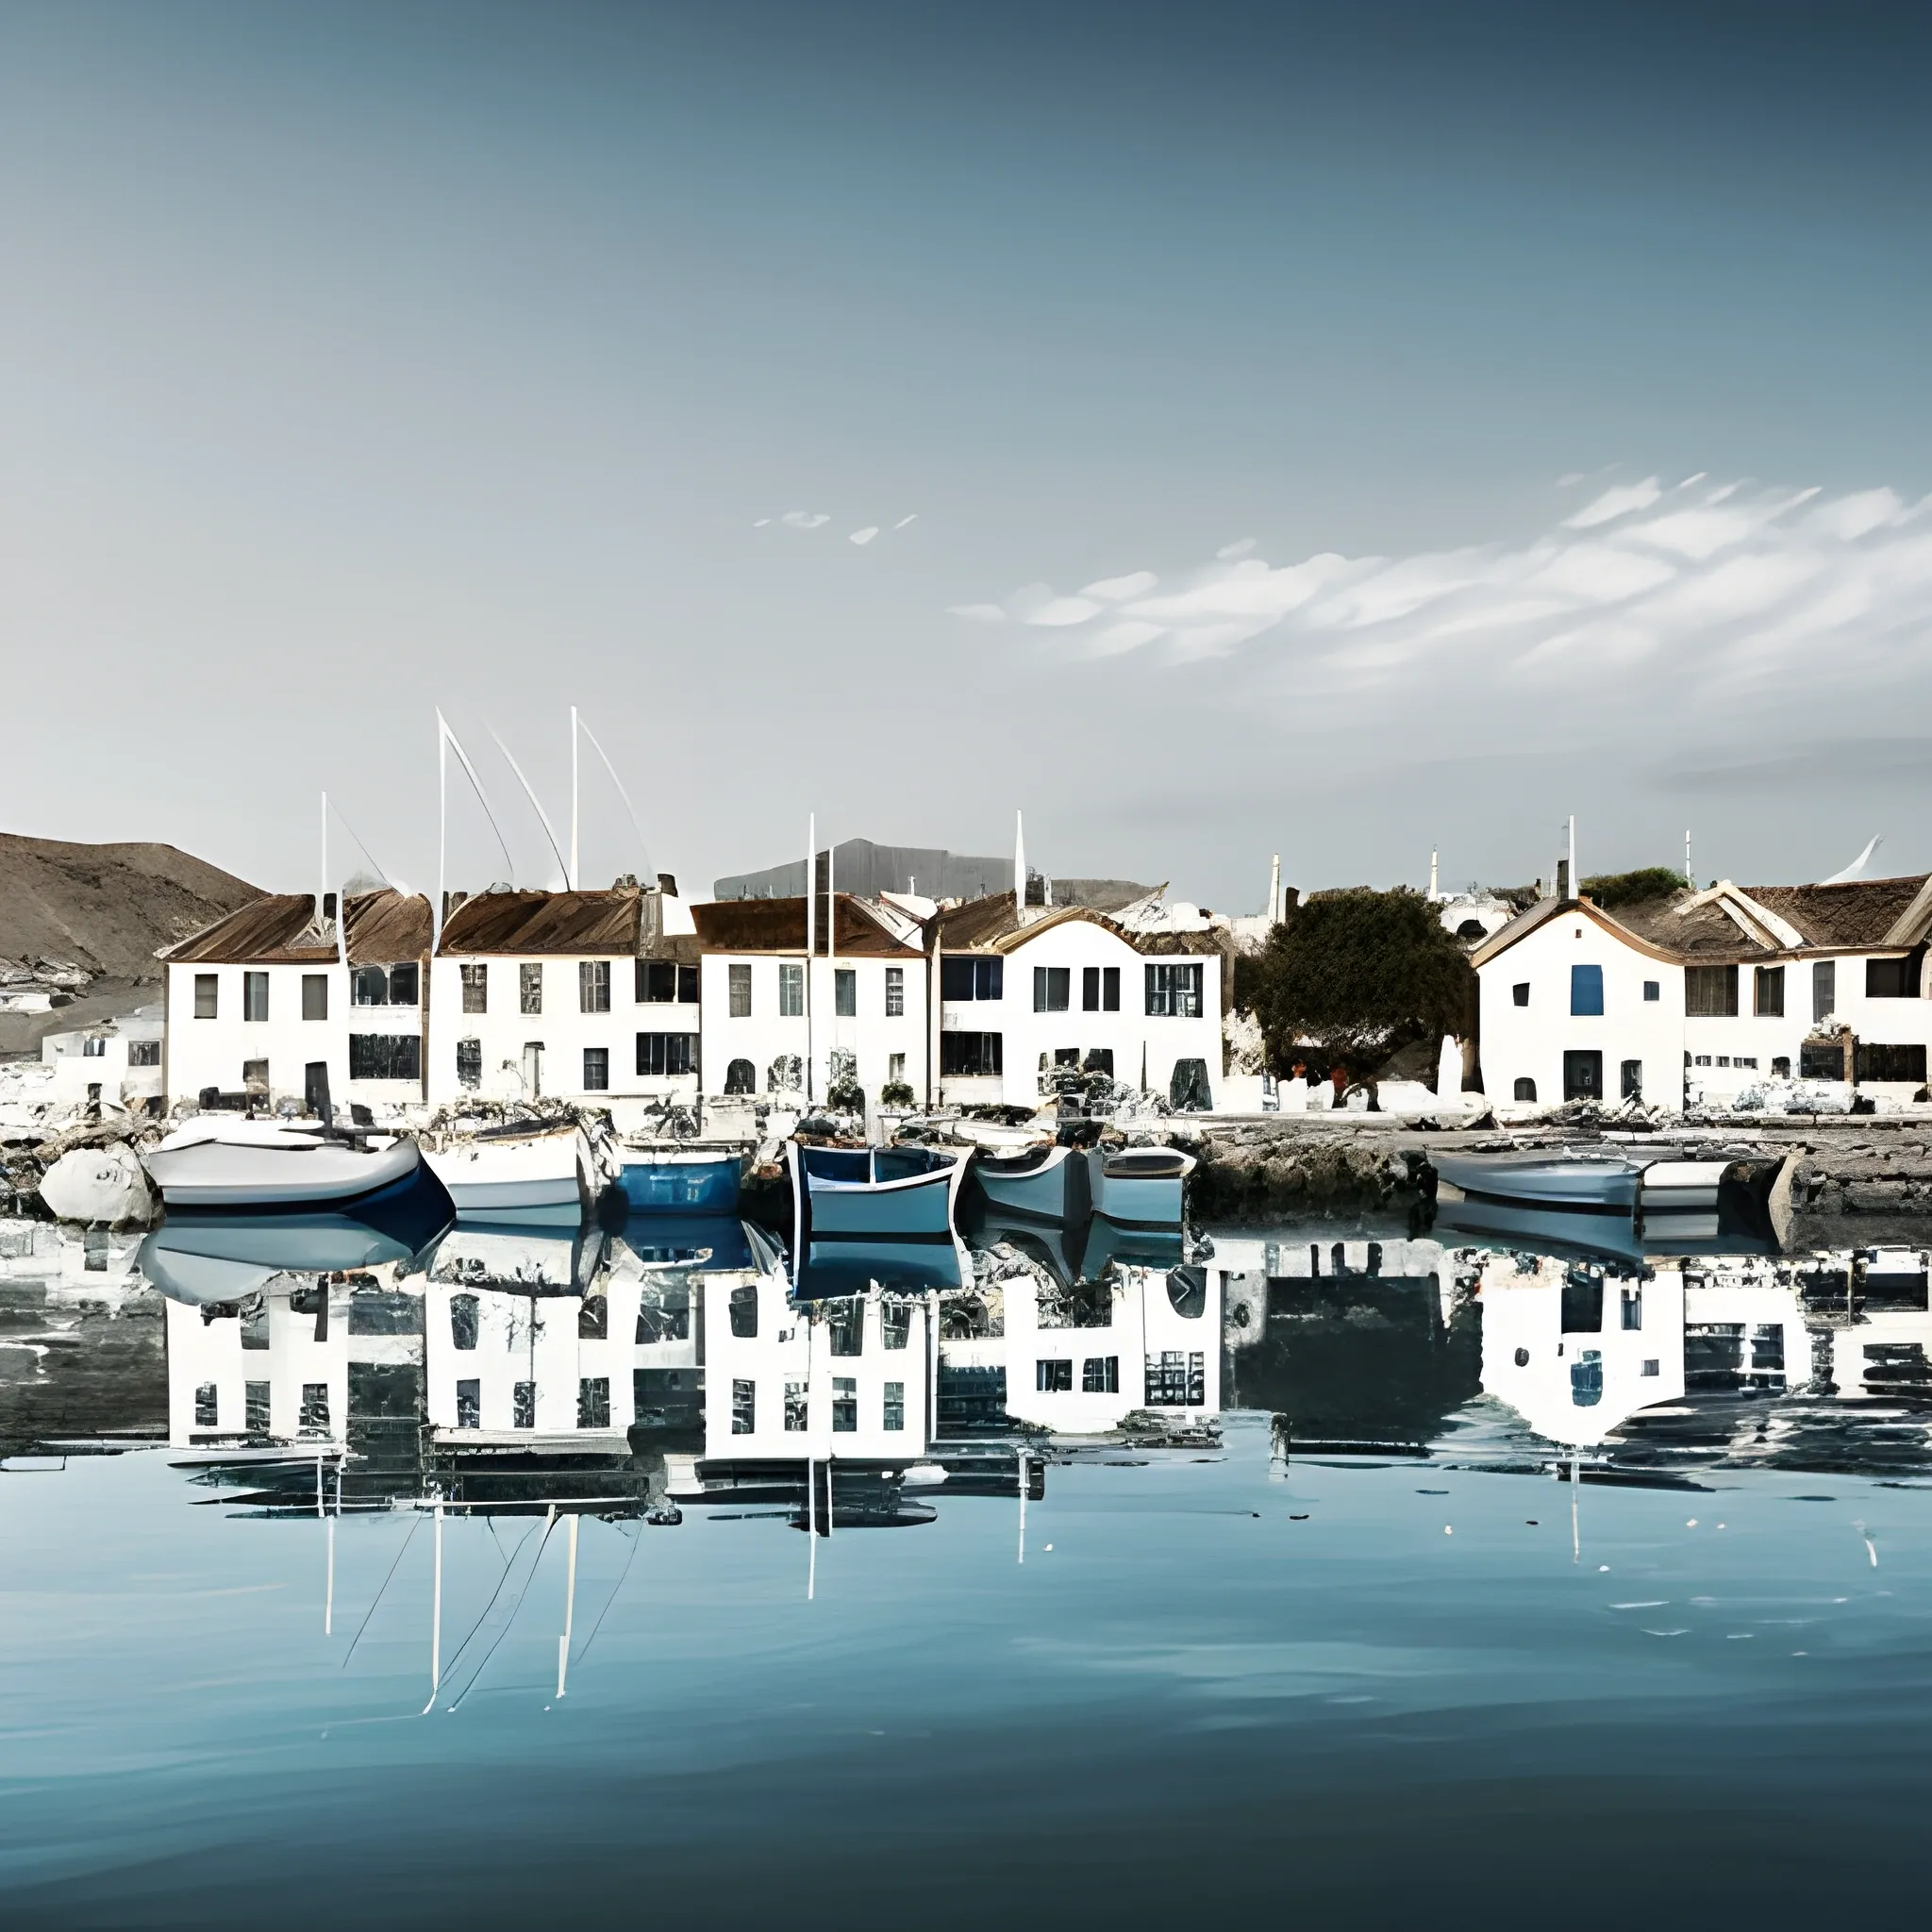 marina, one boat, reflections, horizon, shore, white houses, fisherman, in the distance, anna masana, black ink
